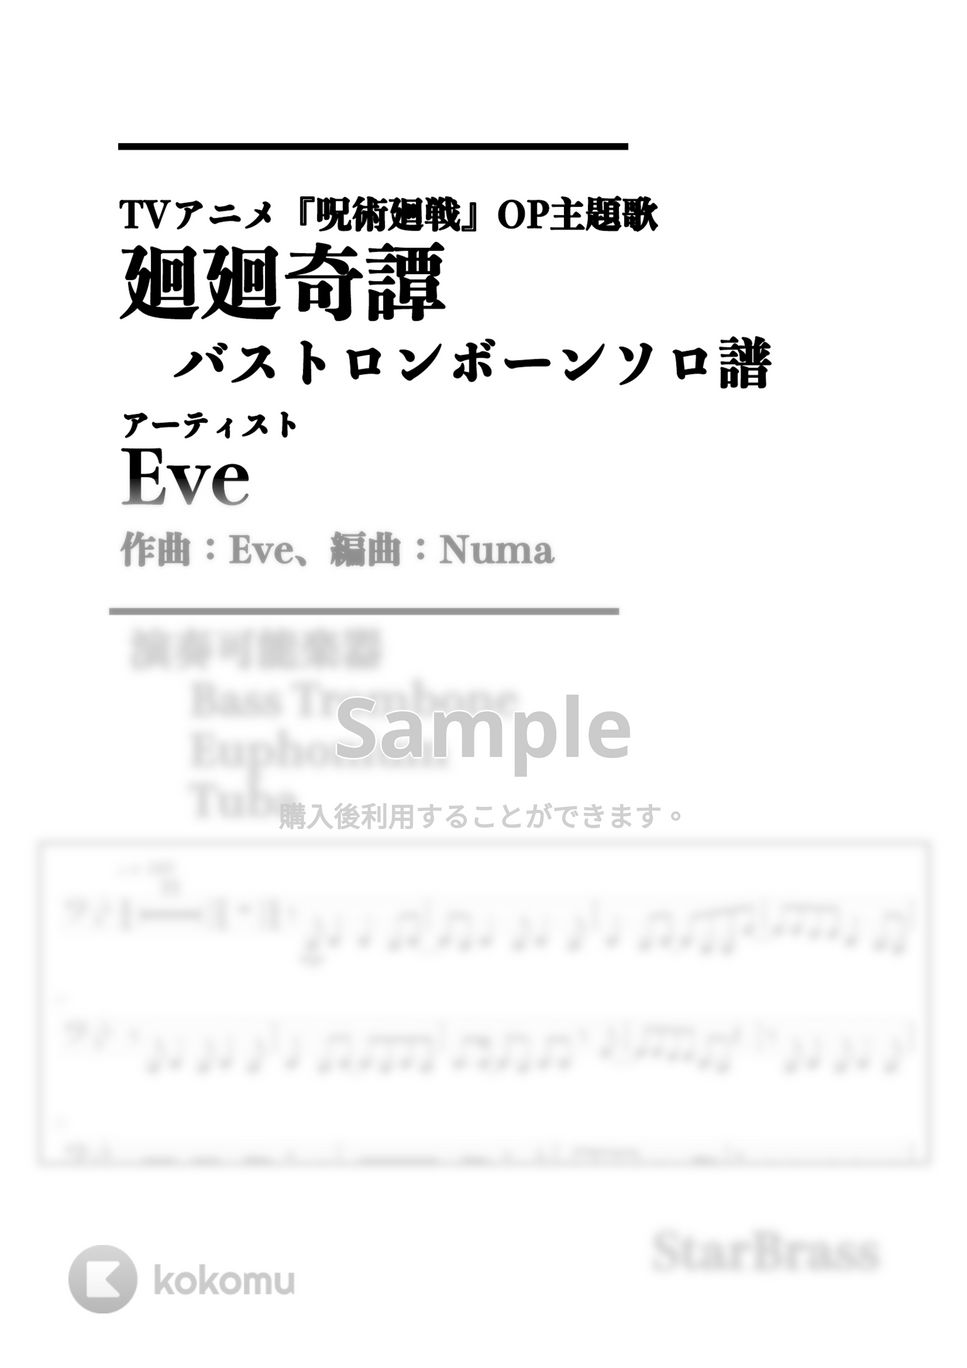 Eve - 廻廻奇譚 (バストロンボーンソロ譜 / アニメサイズ / 原キー) by Creampuff